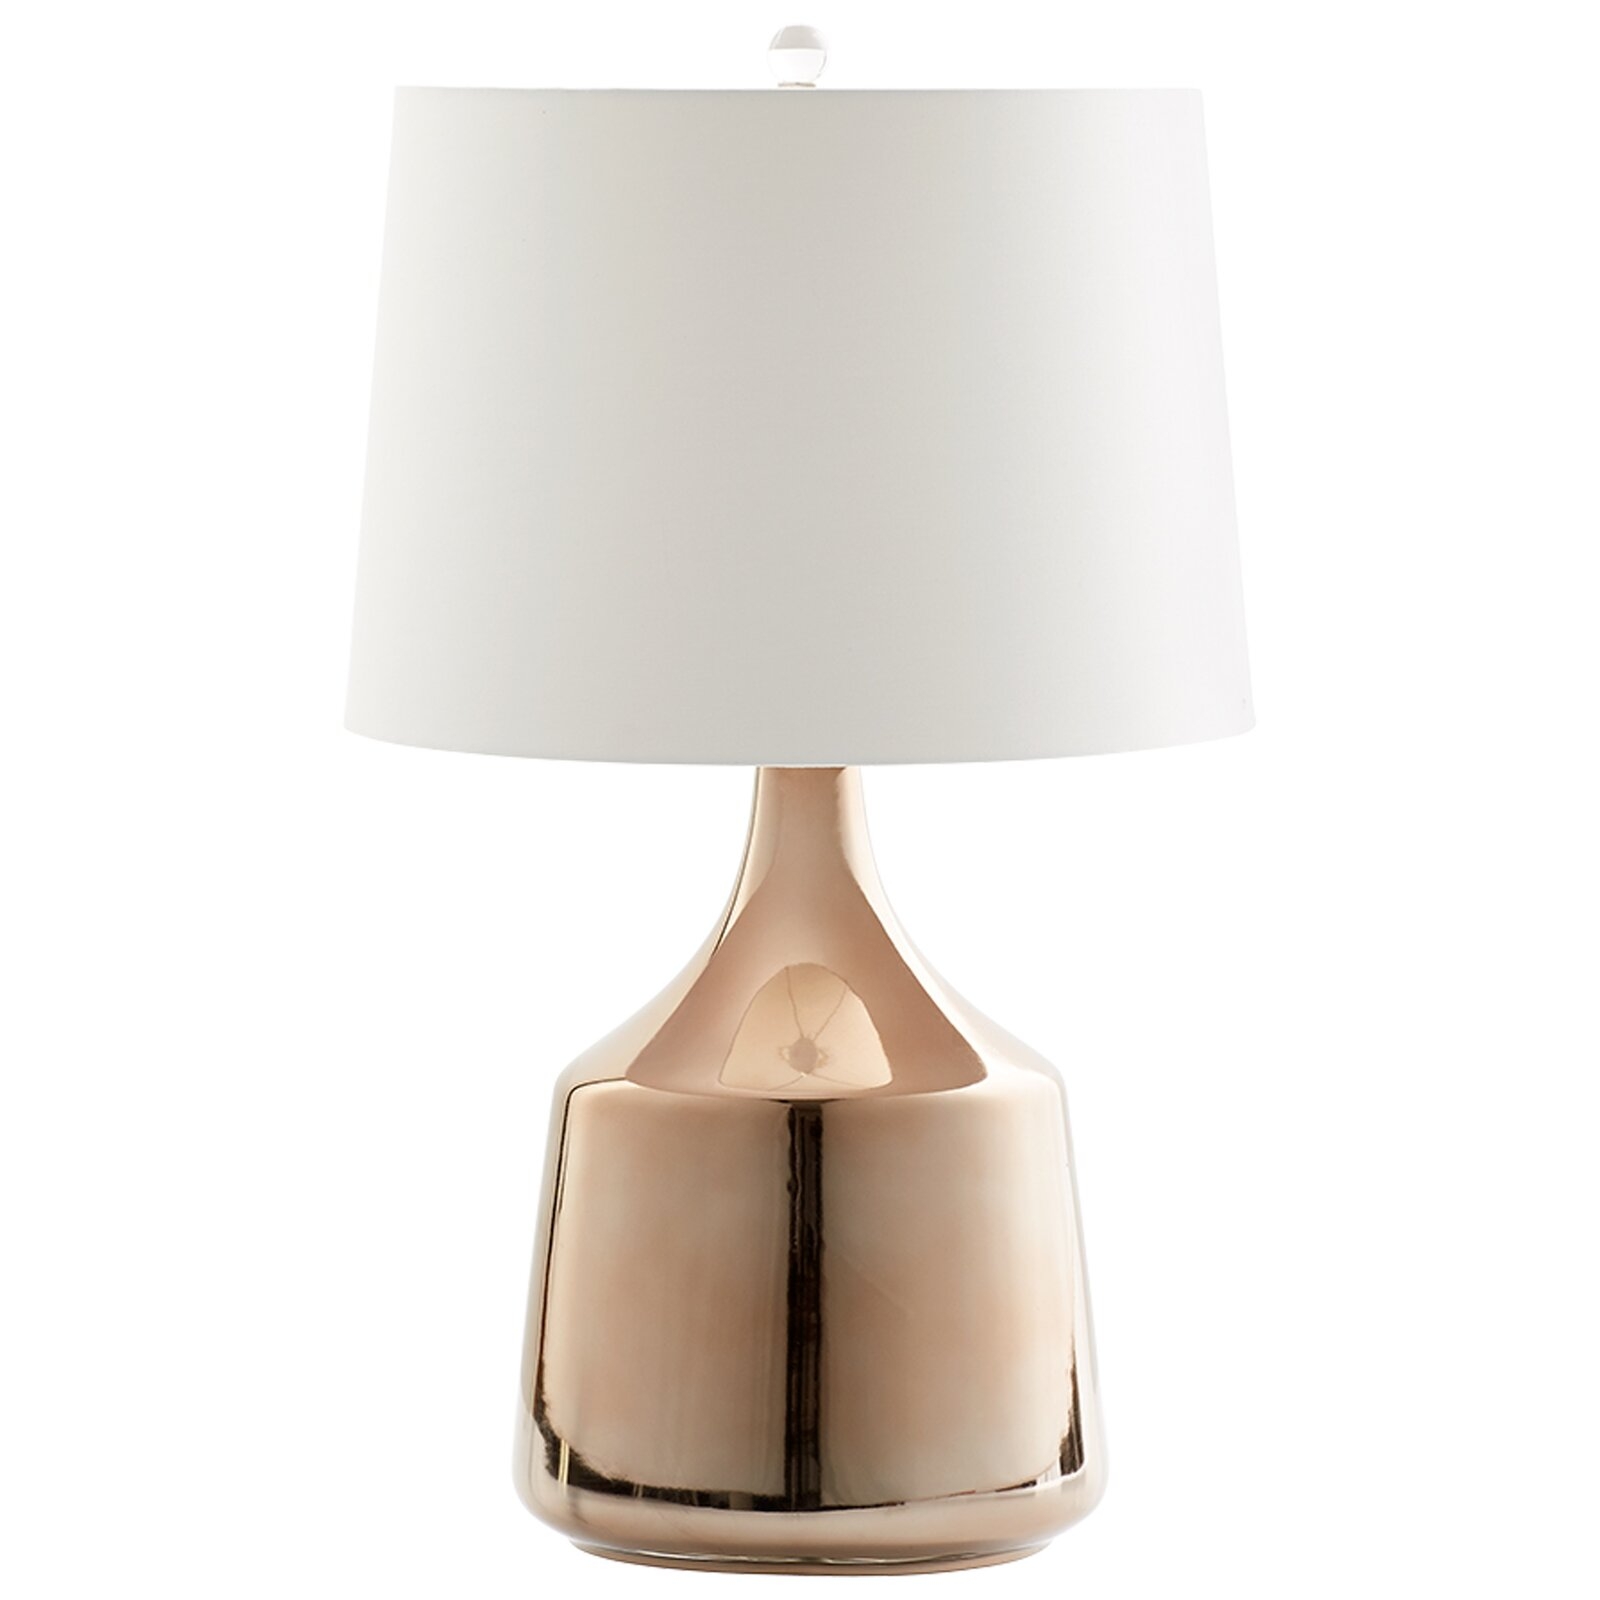 "Cyan Design Flynn 29.8"" Table Lamp" - Image 0